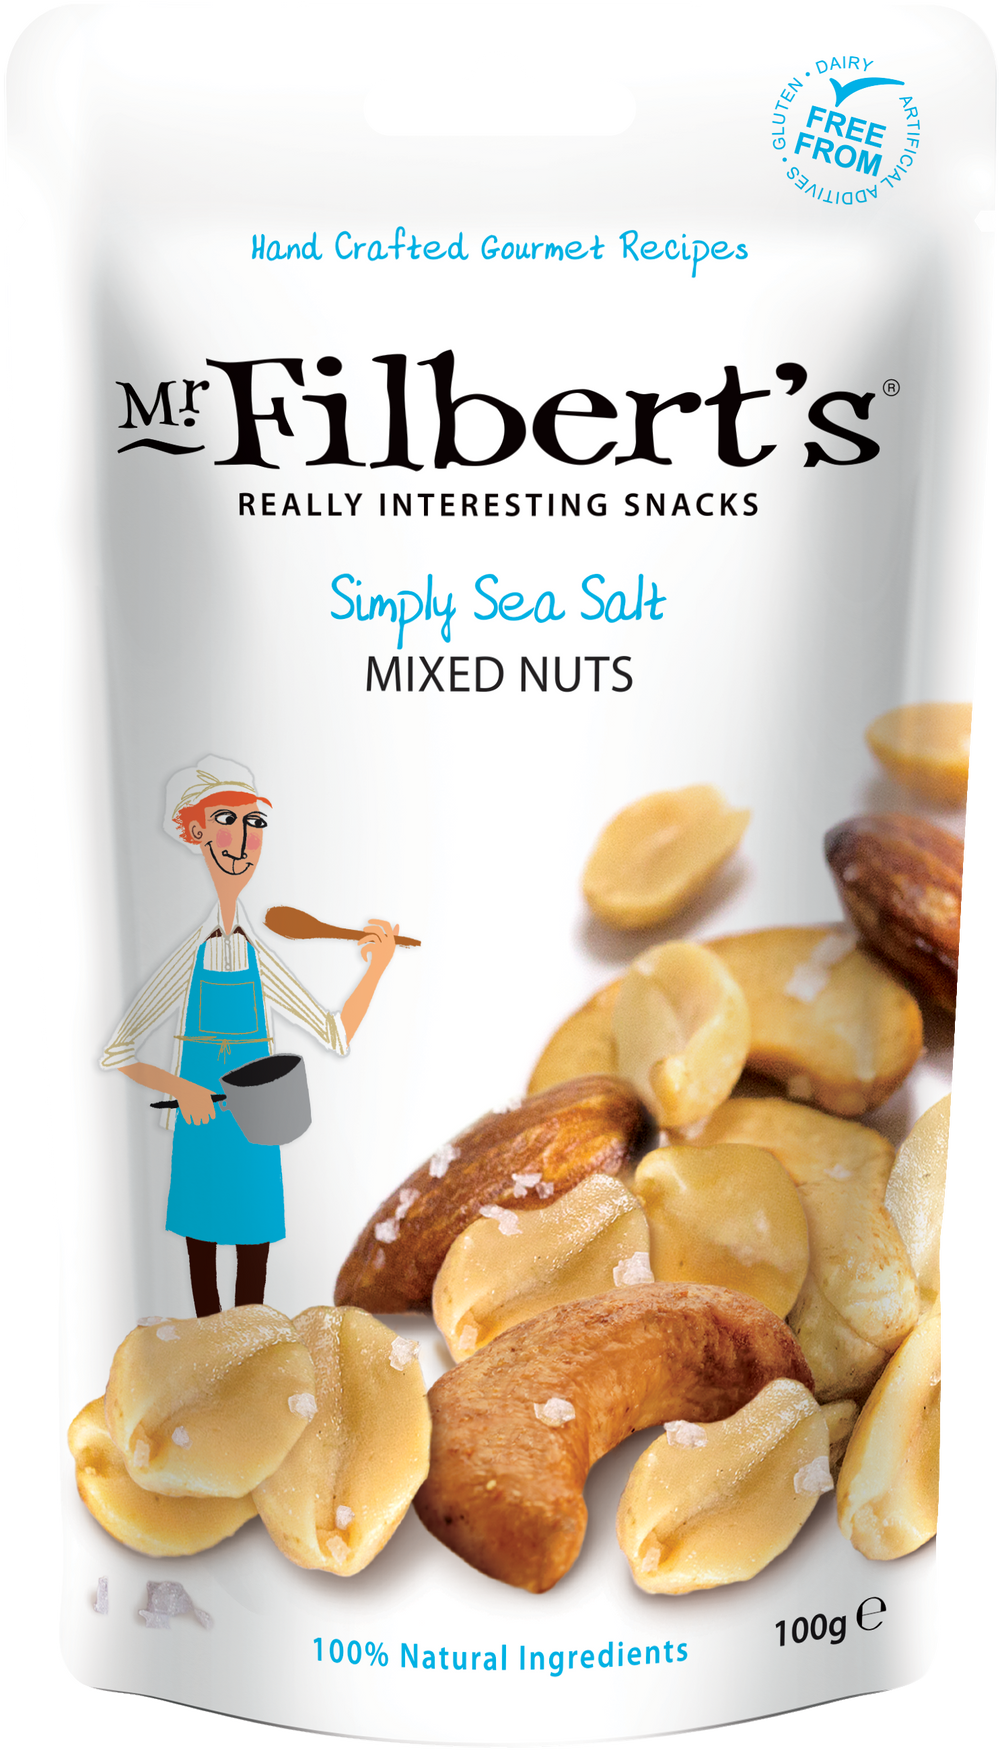 Simply Sea Salt Mixed Nuts